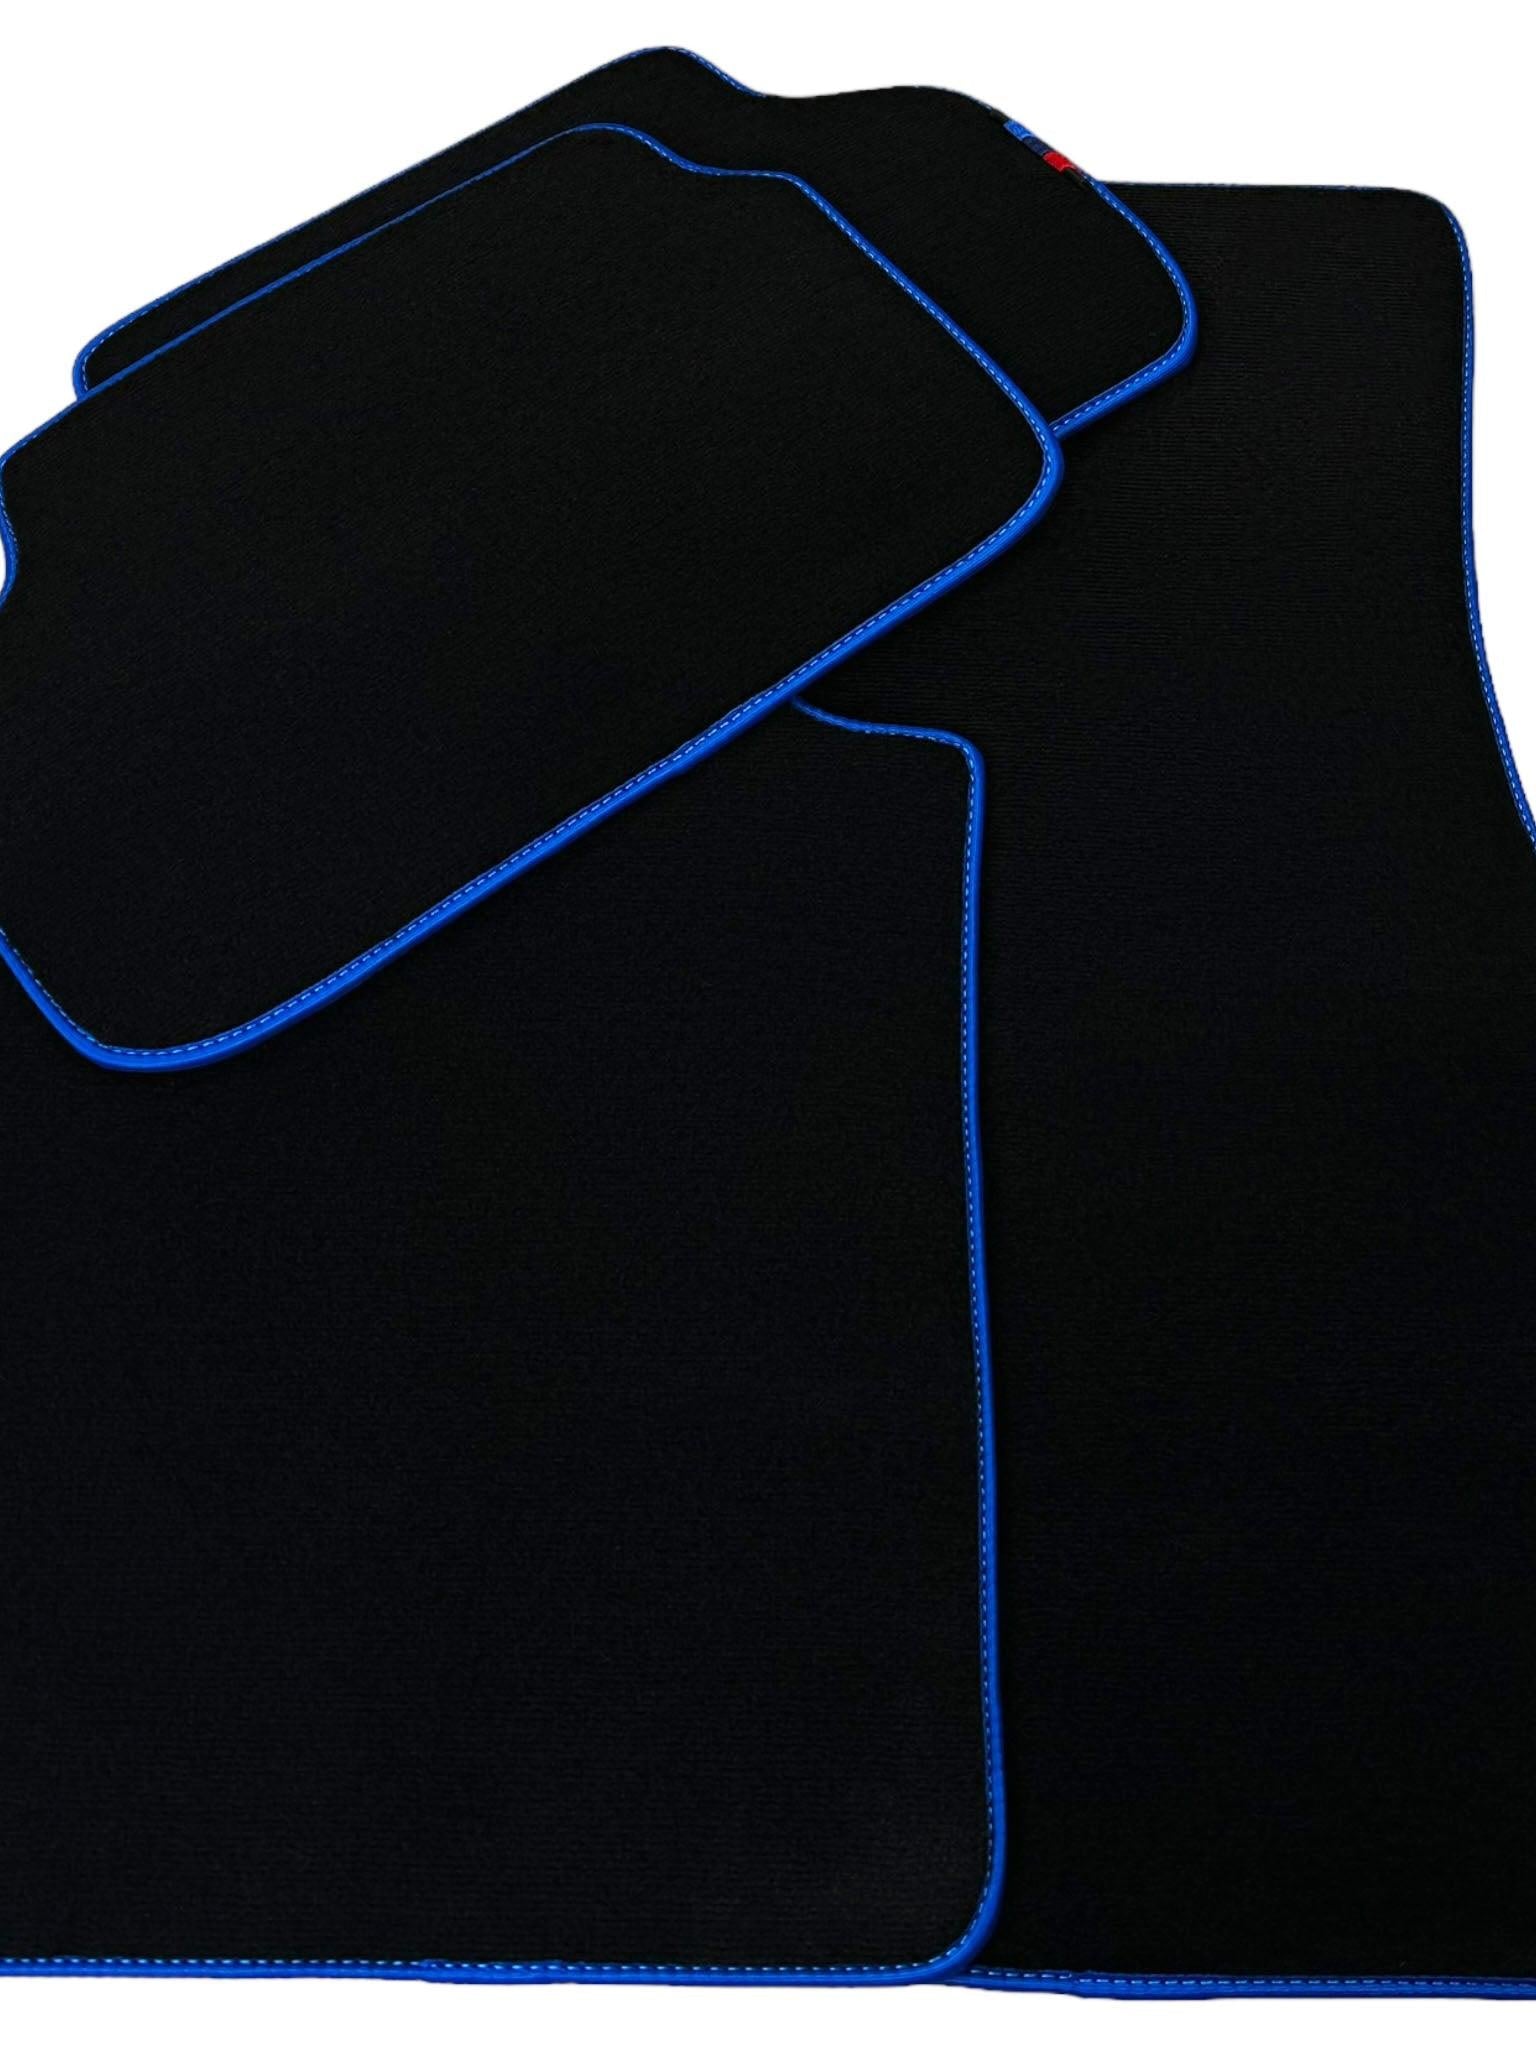 Black Floor Floor Mats For BMW X5 Series E70 | Blue Trim